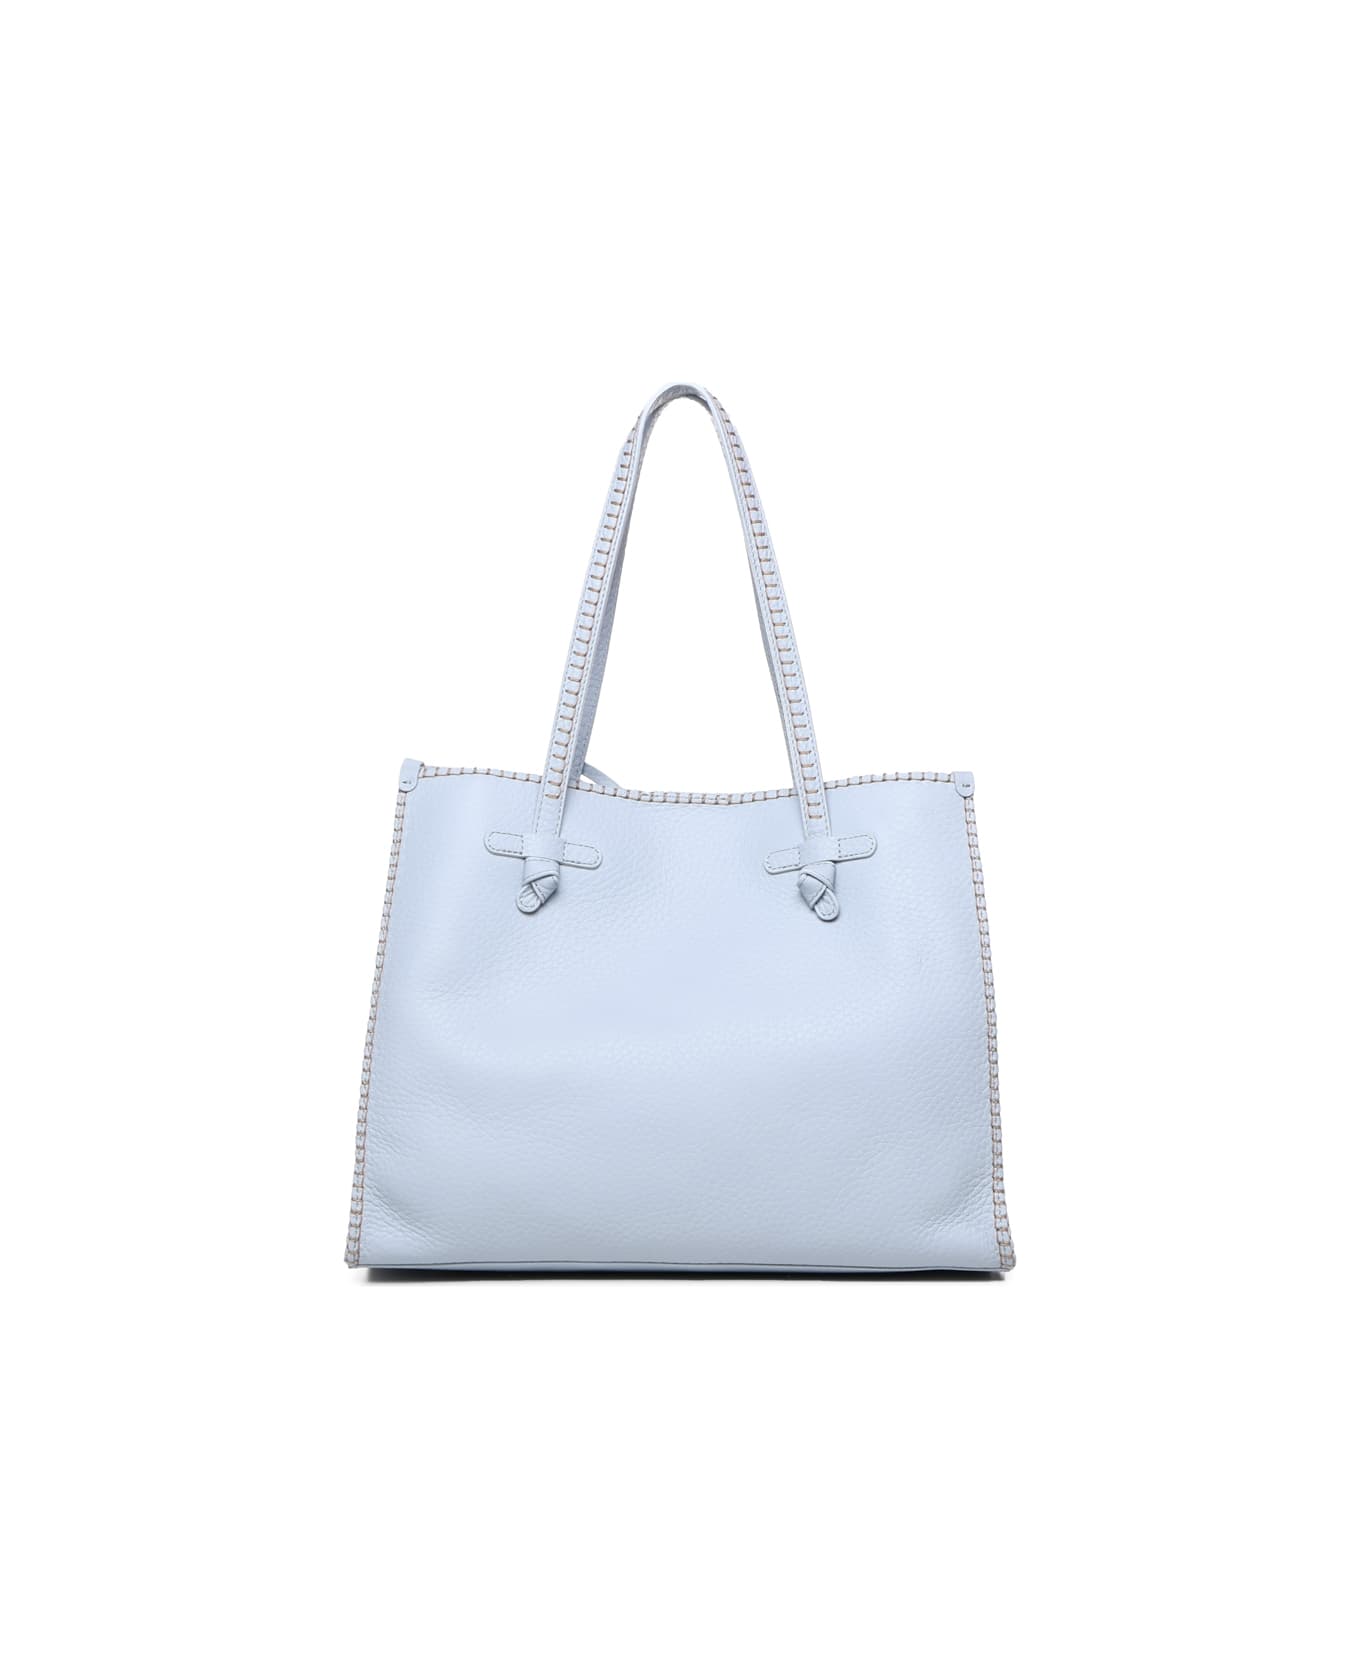 Gianni Chiarini Marcella Shopping Bag In Leather - Light blue